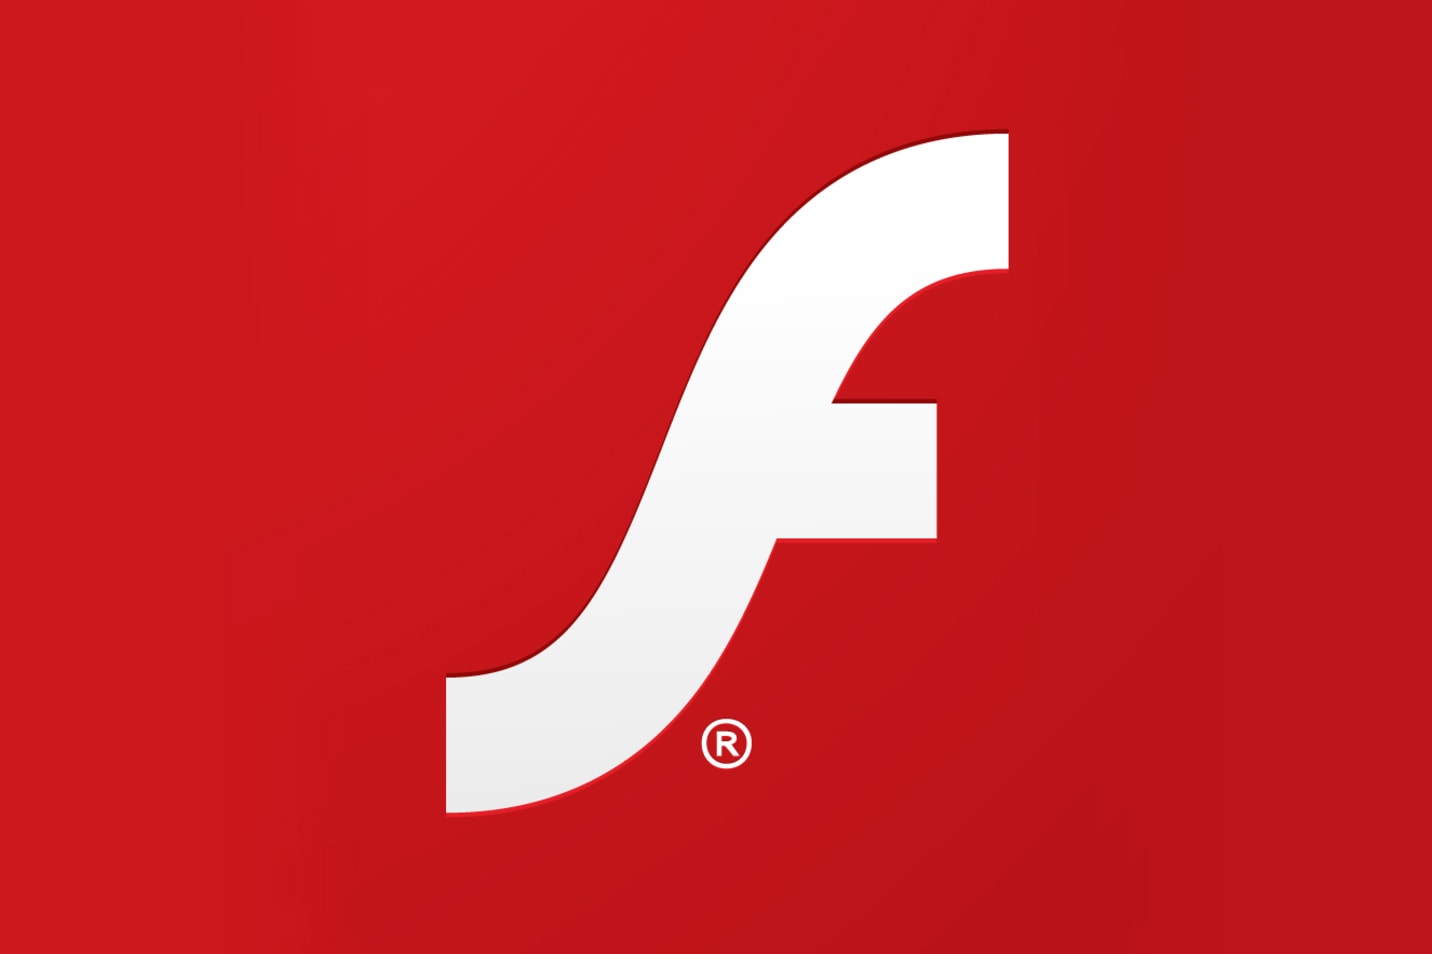 Adobe Flash Kill End Support 2020